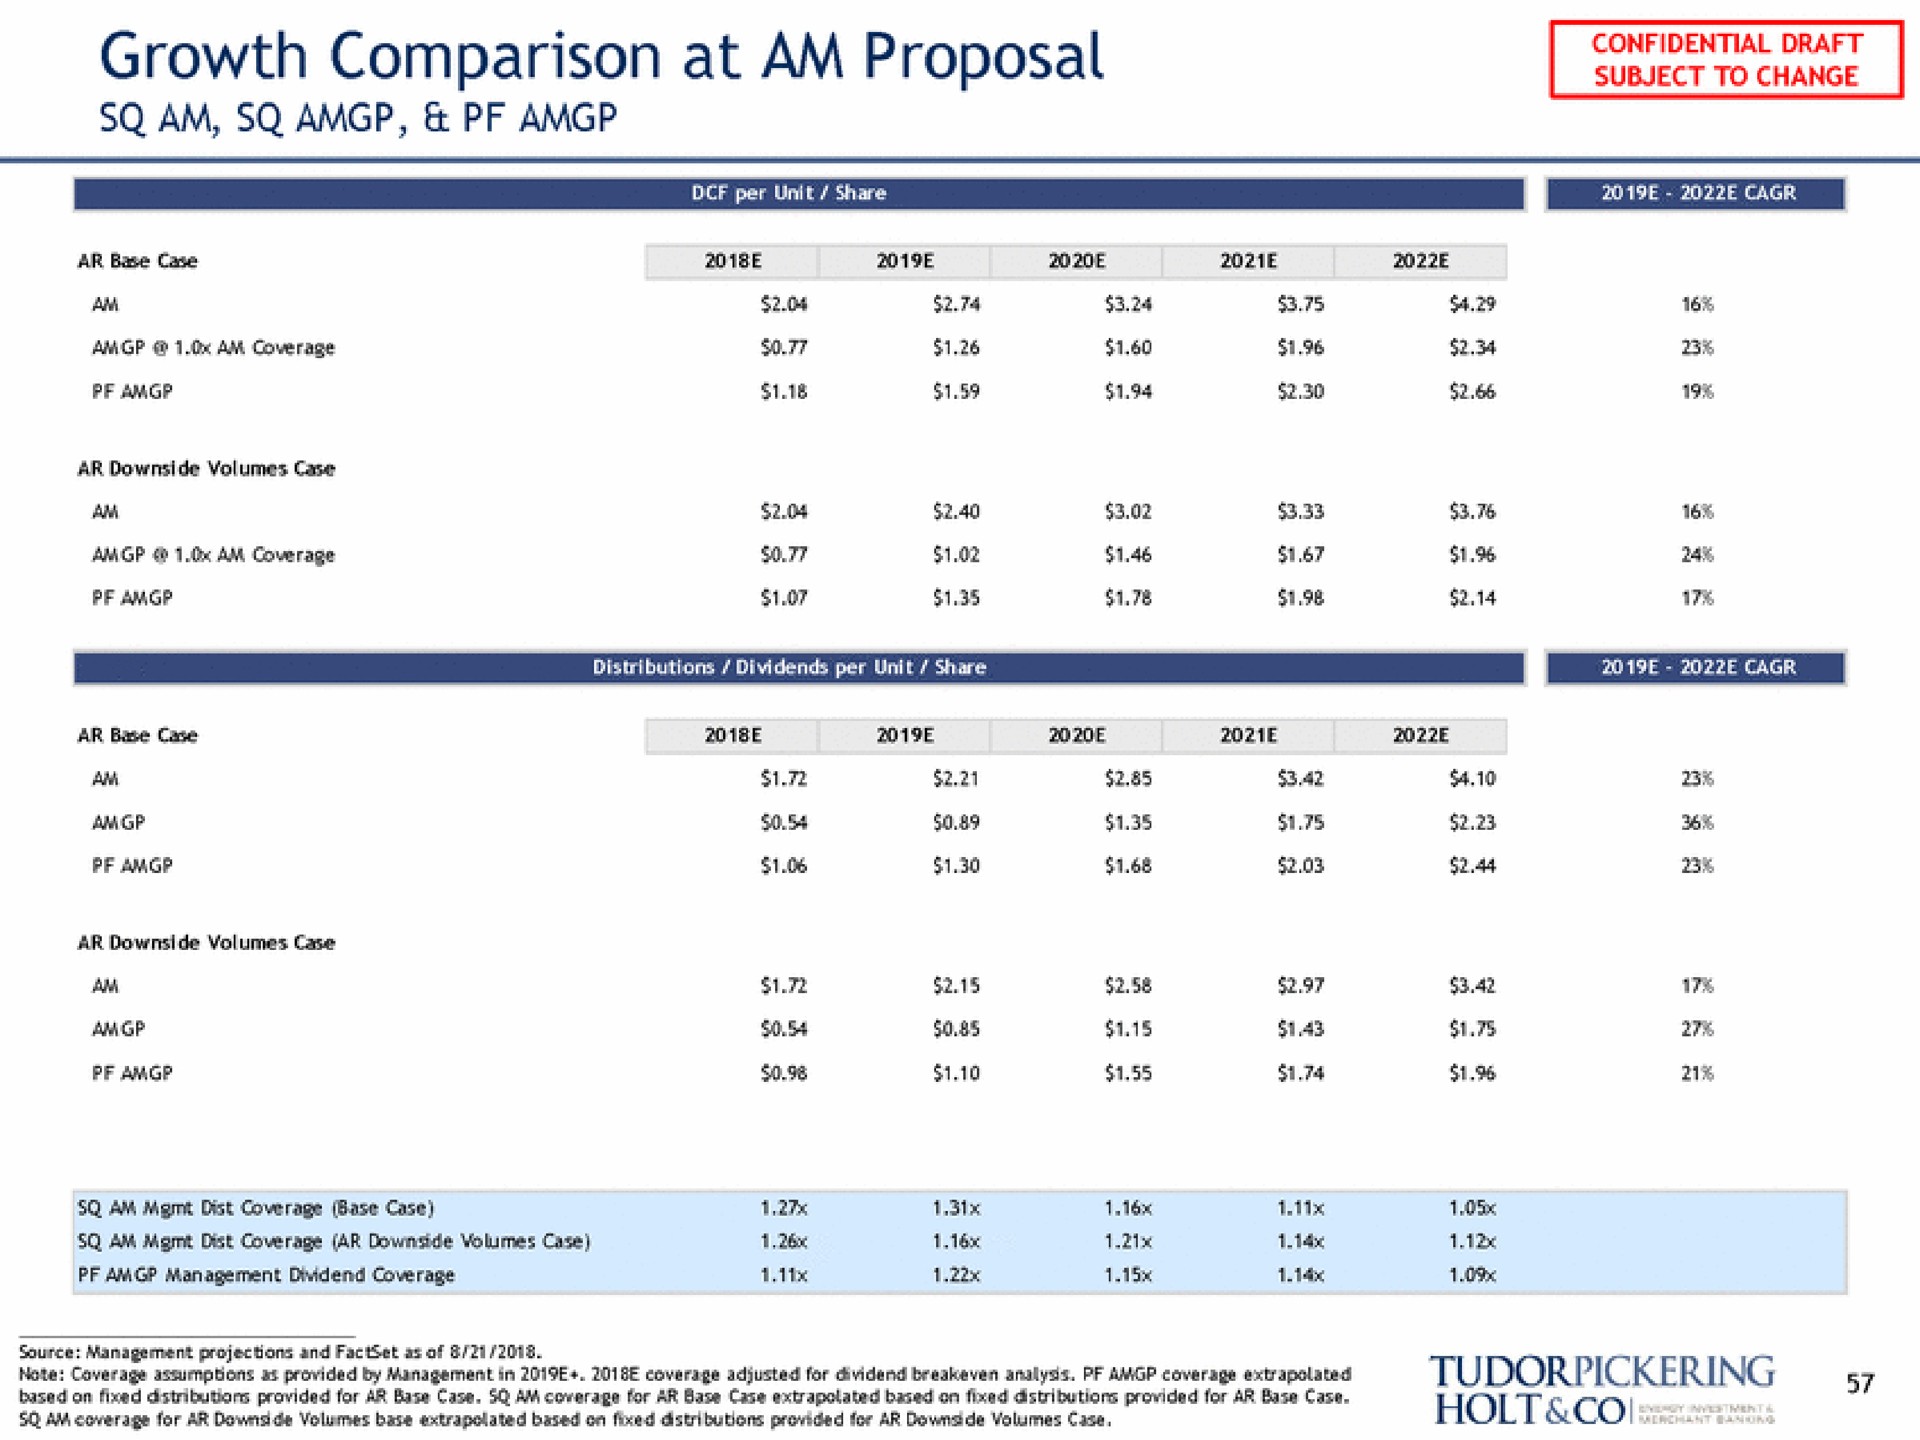 growth comparison at am proposal am | Tudor, Pickering, Holt & Co